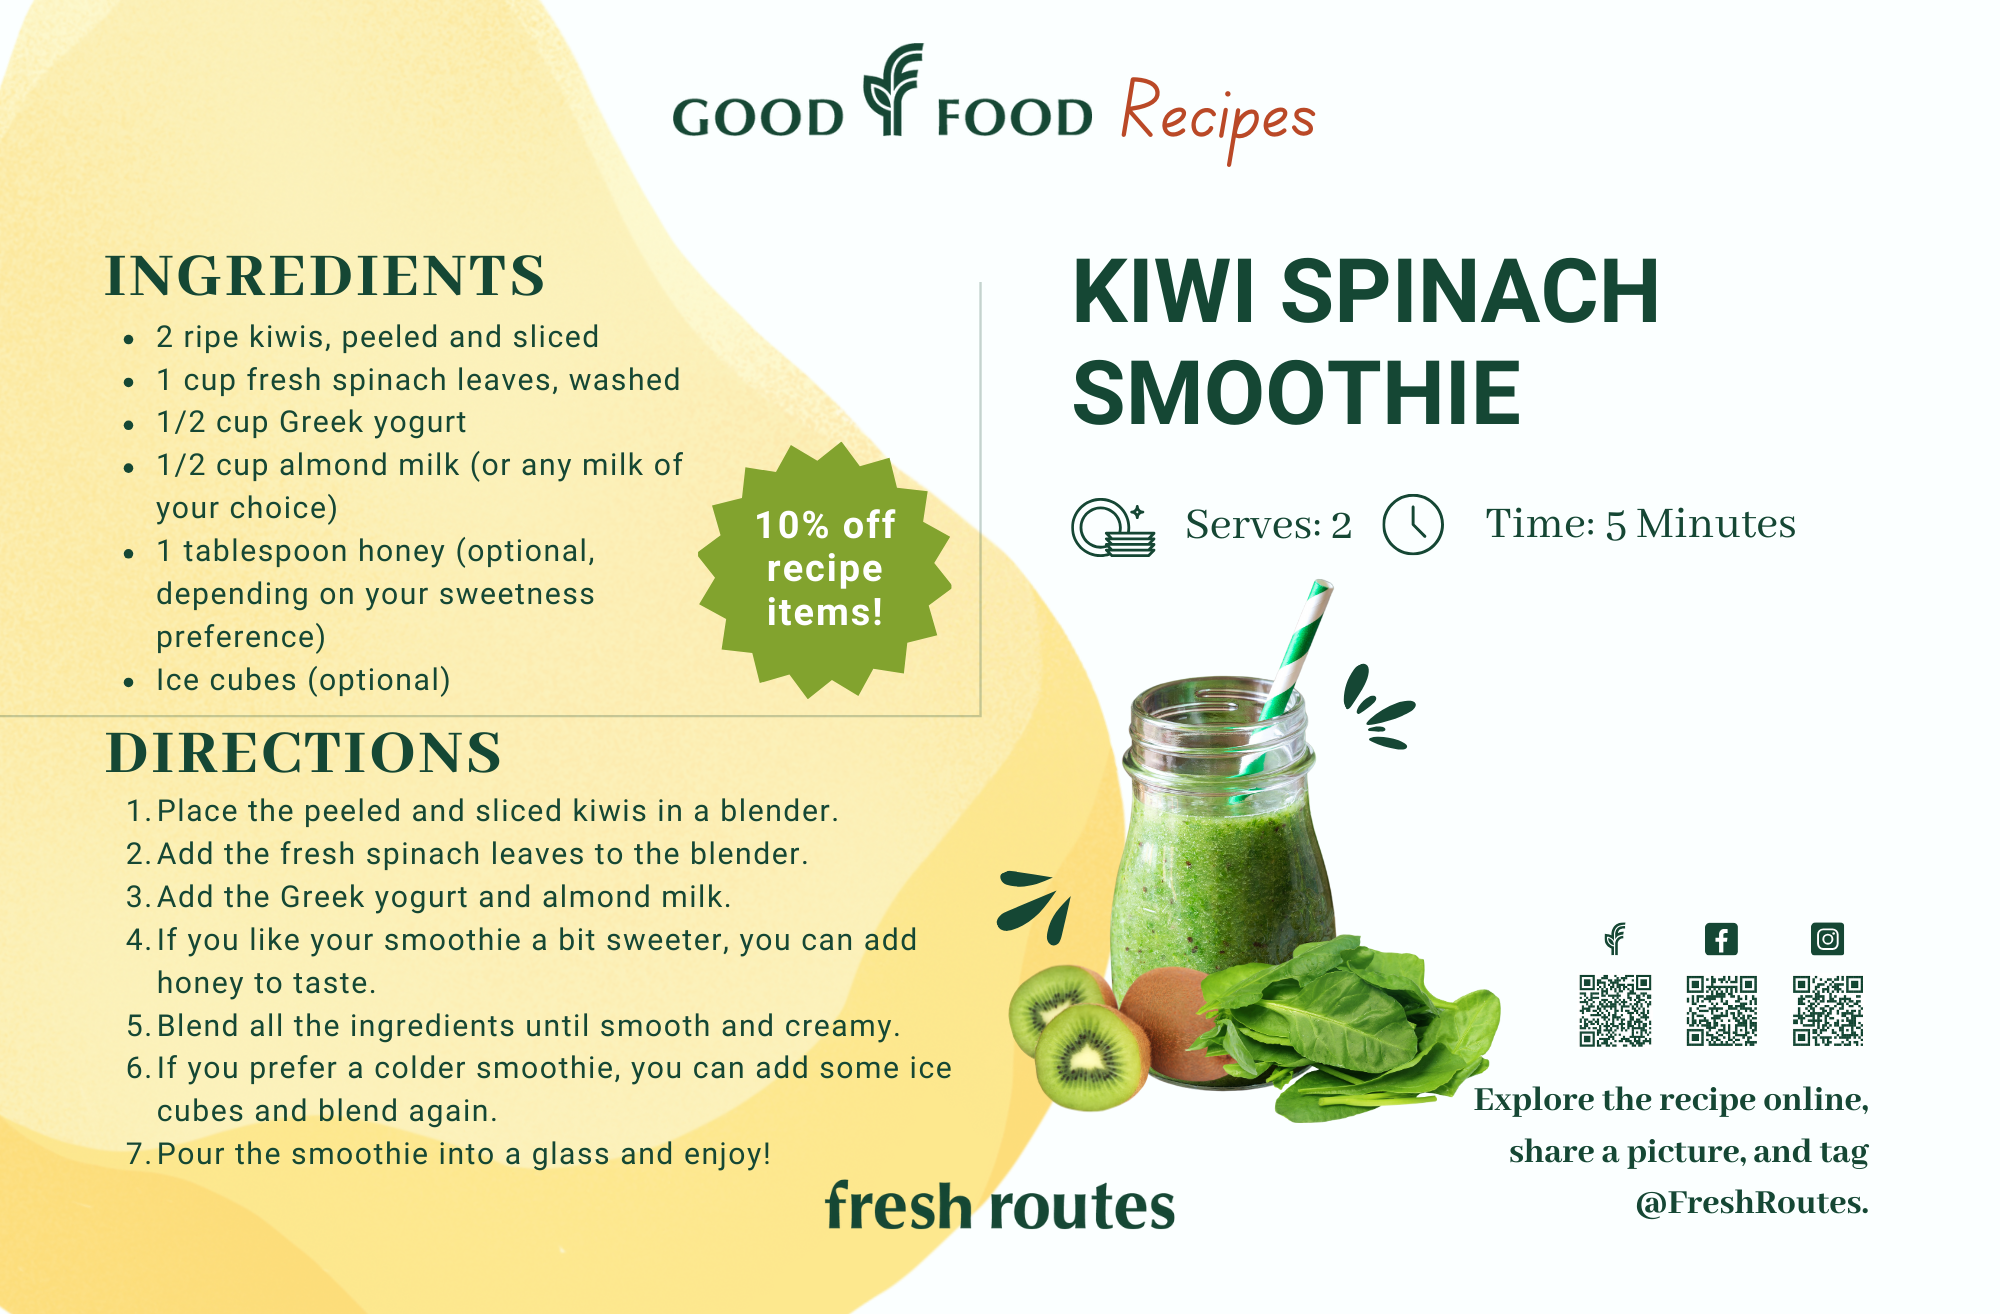 Kiwi Spinach Smoothie